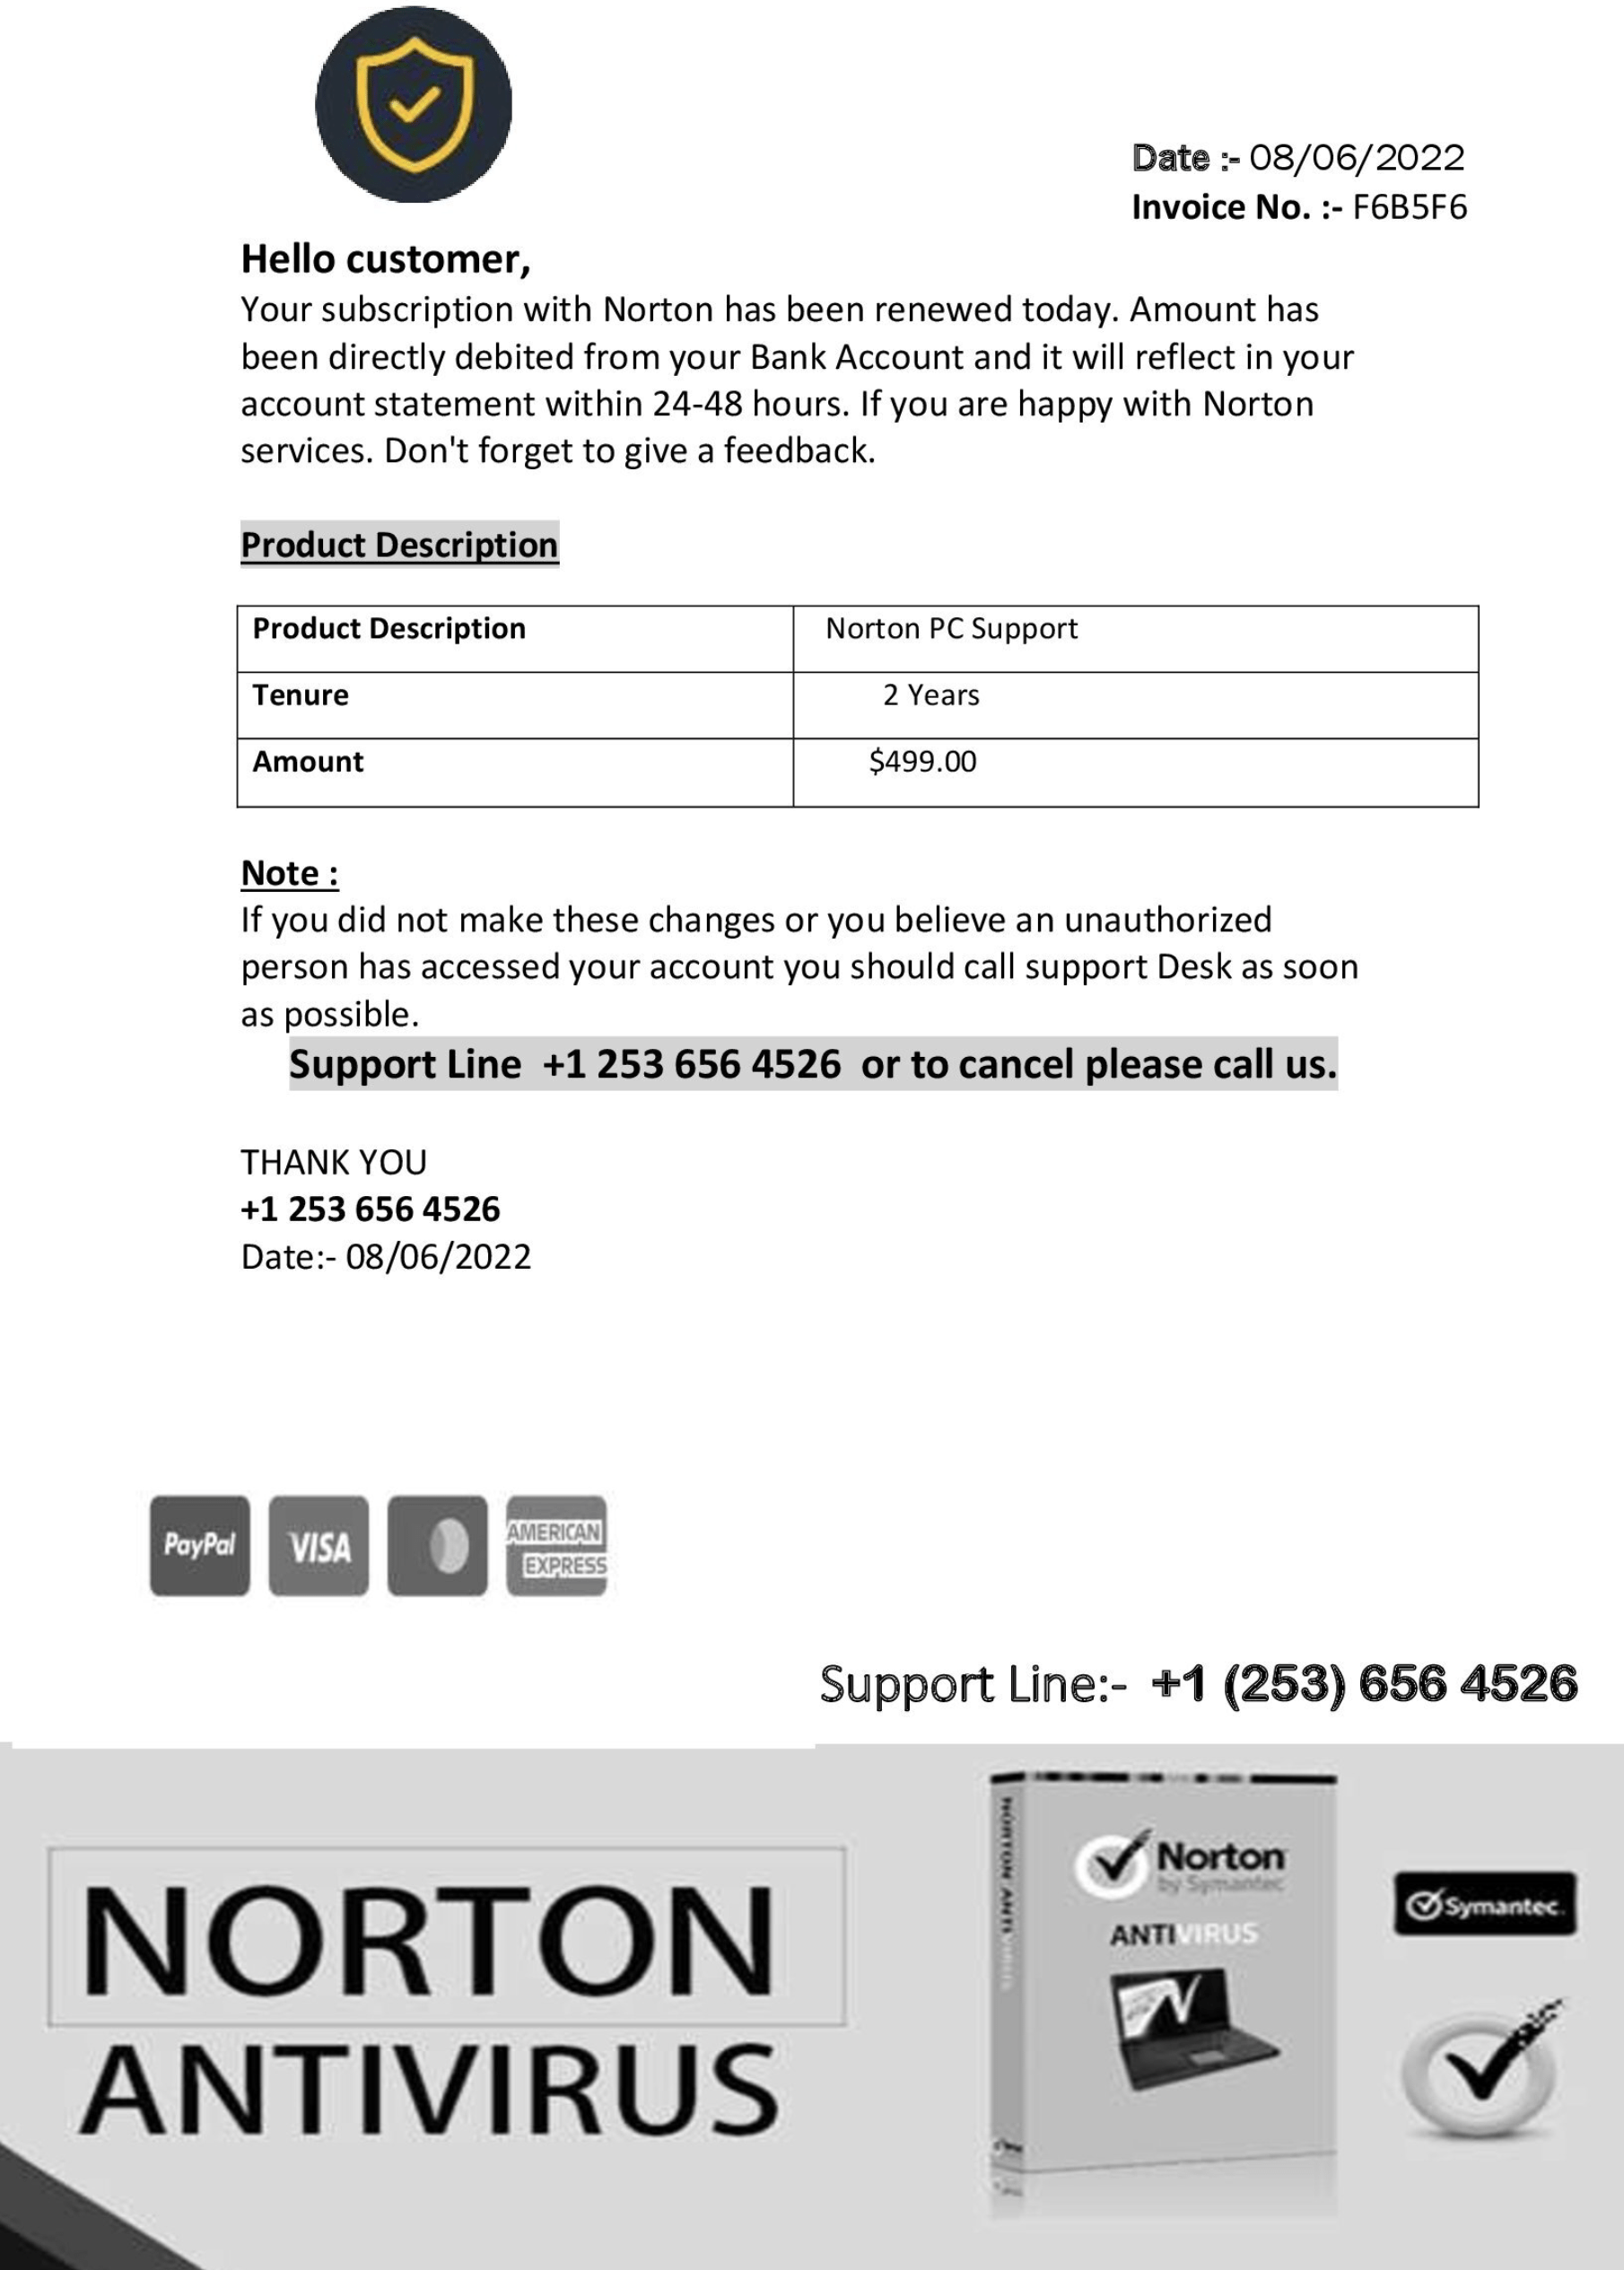 Norton Antivirus renewal email Scam